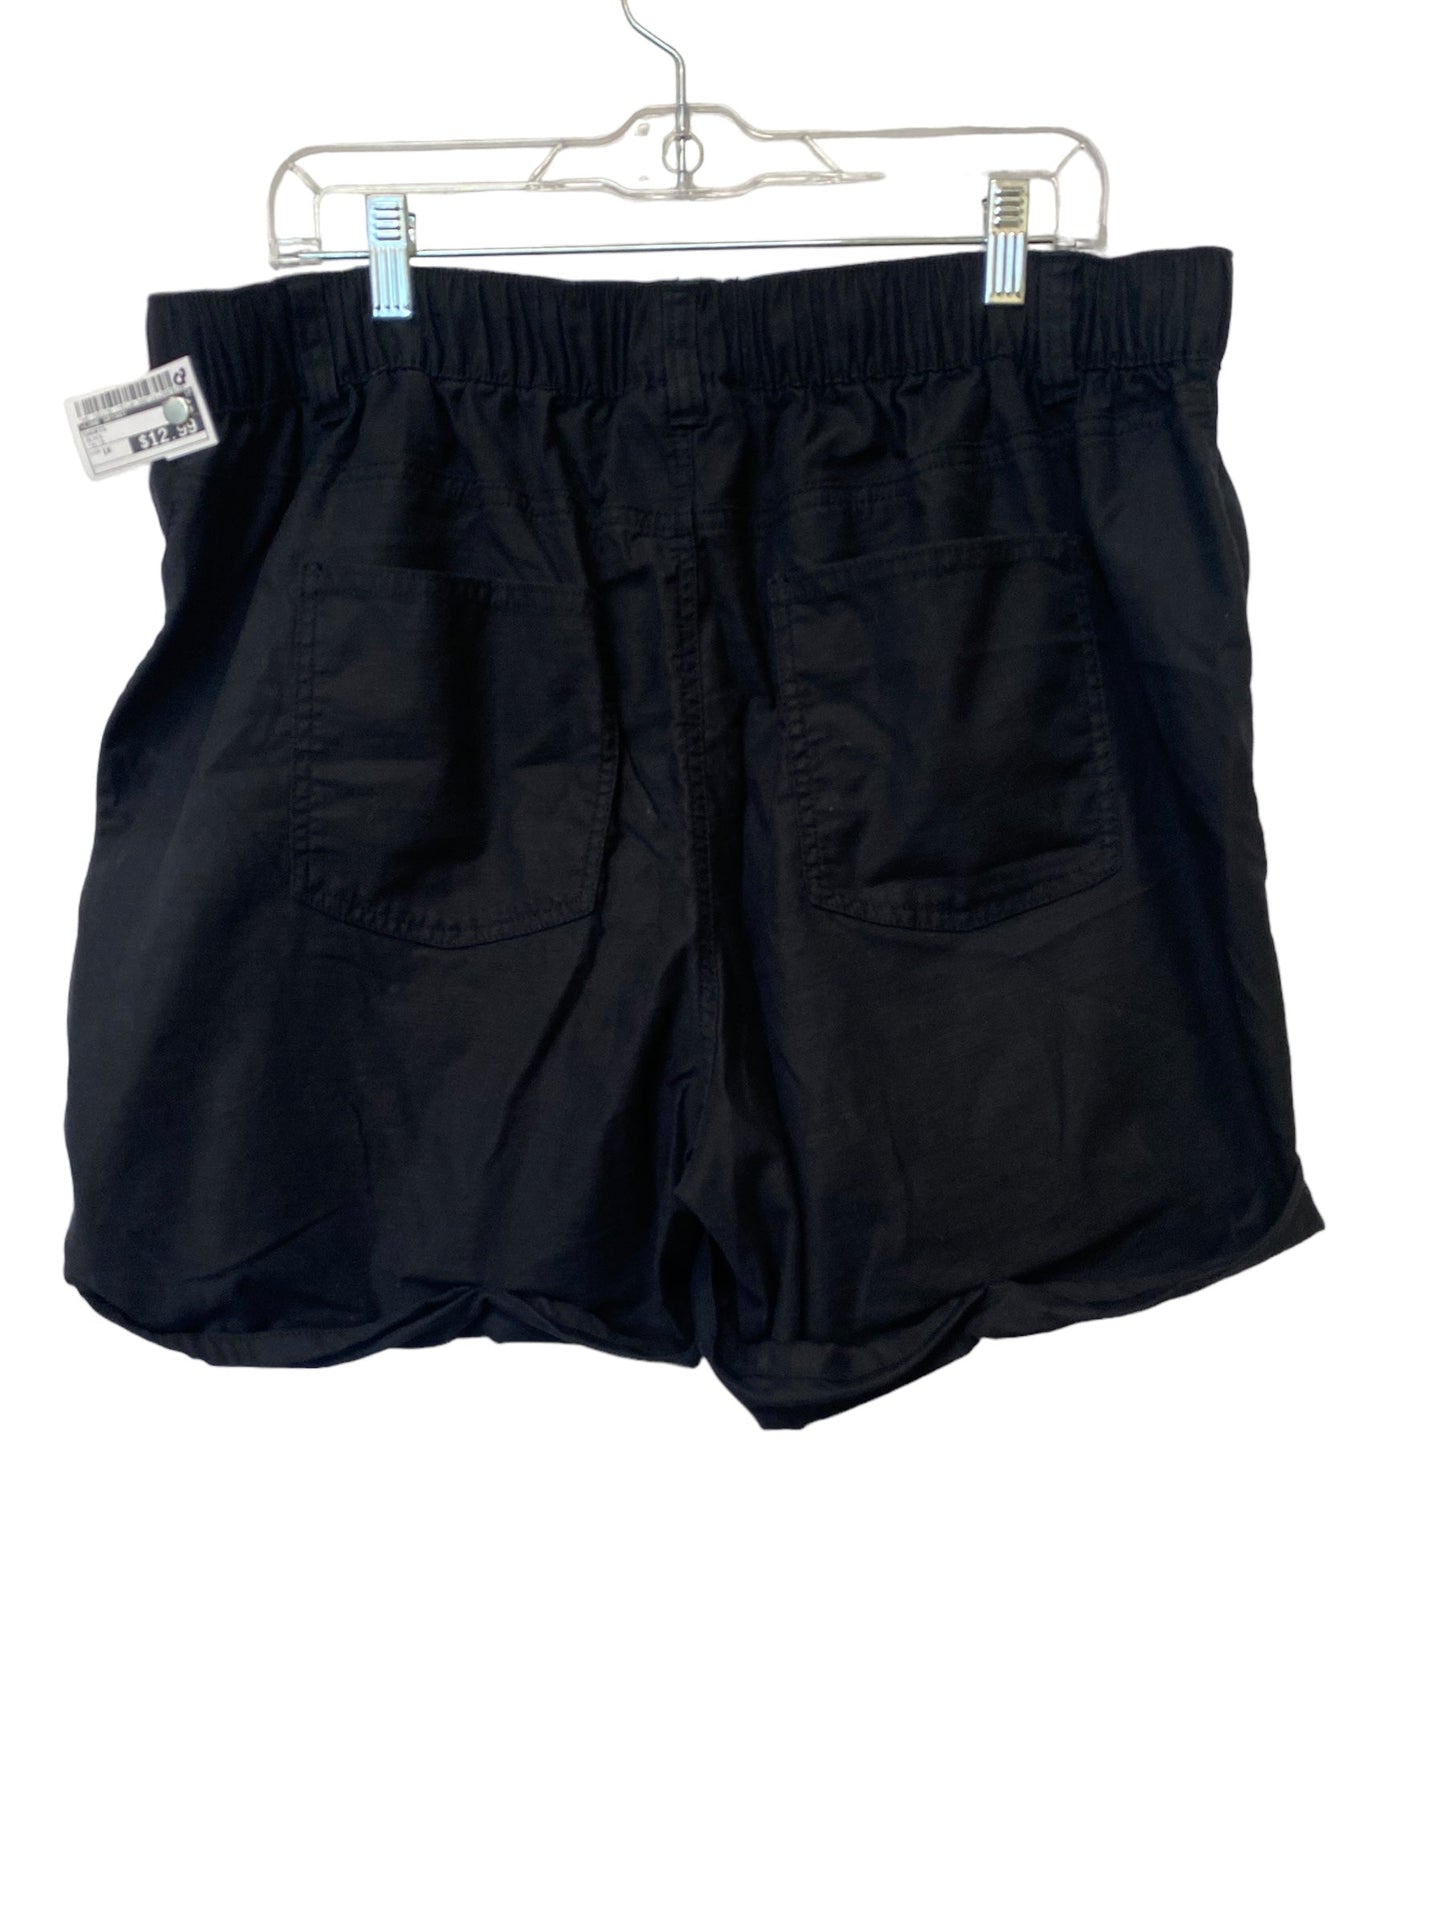 Black Shorts Lane Bryant, Size 1x